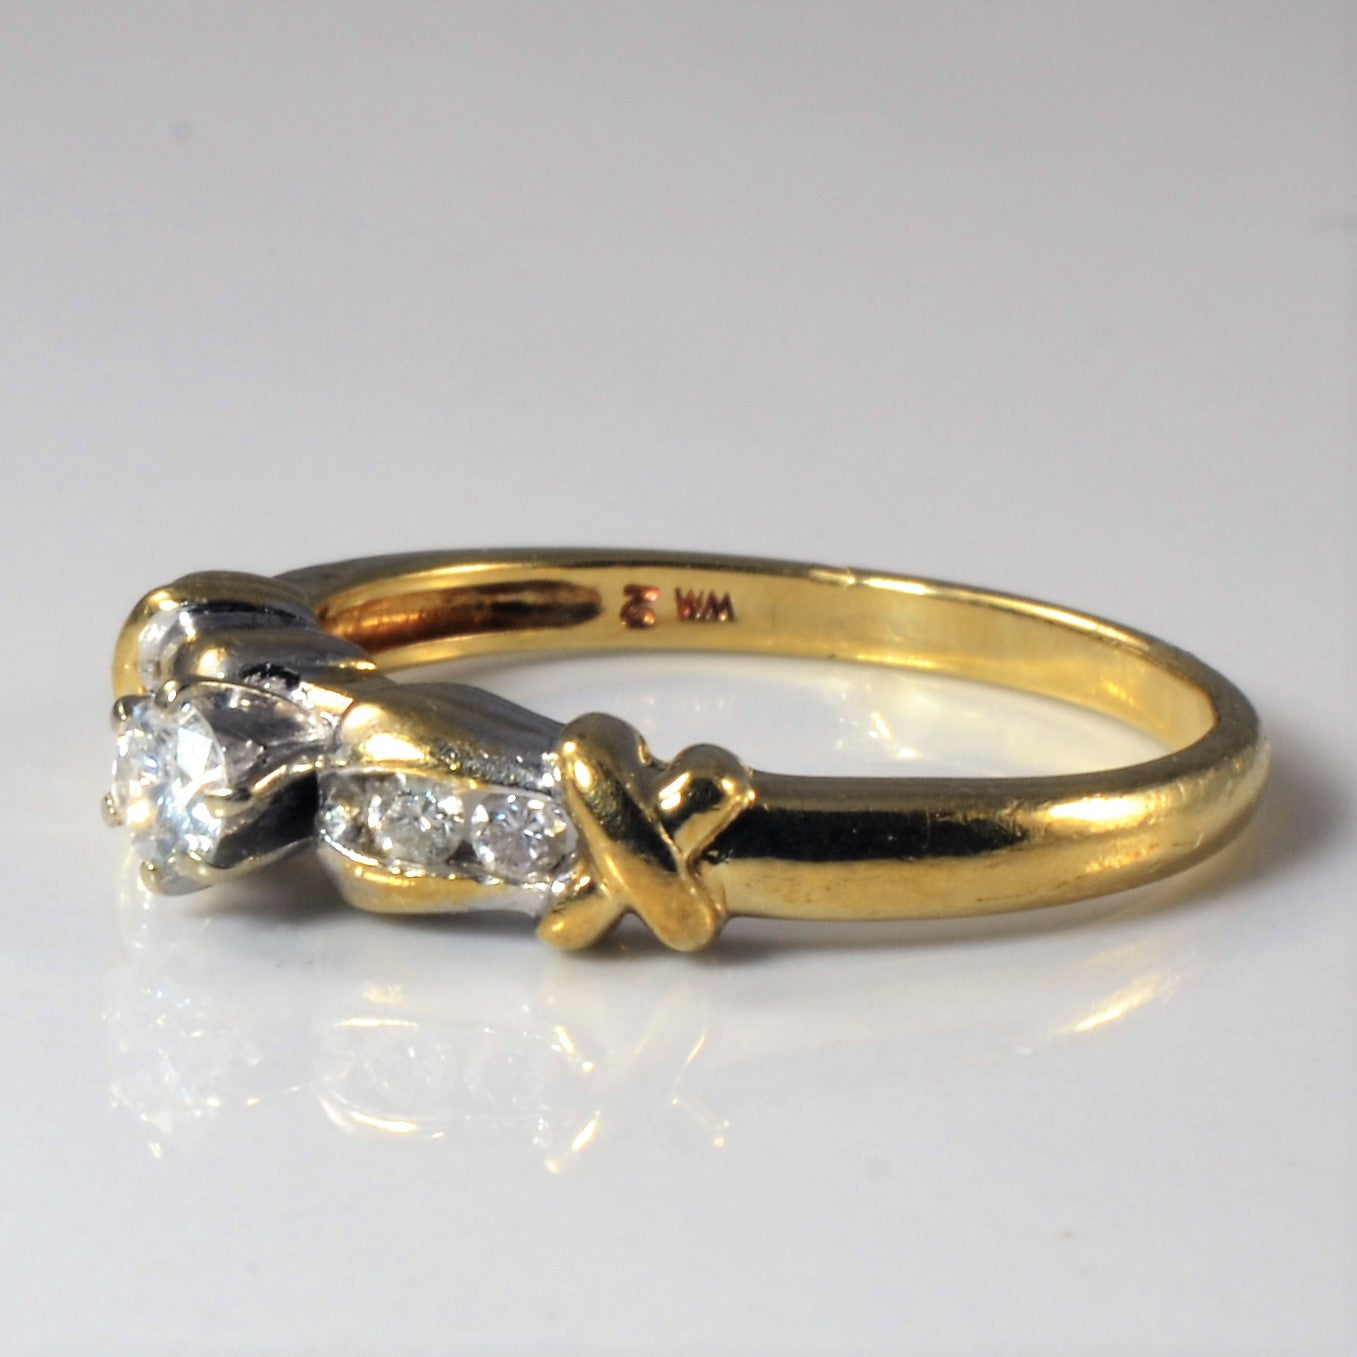 Criss Cross Diamond Engagement Ring | 0.26ctw | SZ 7 |